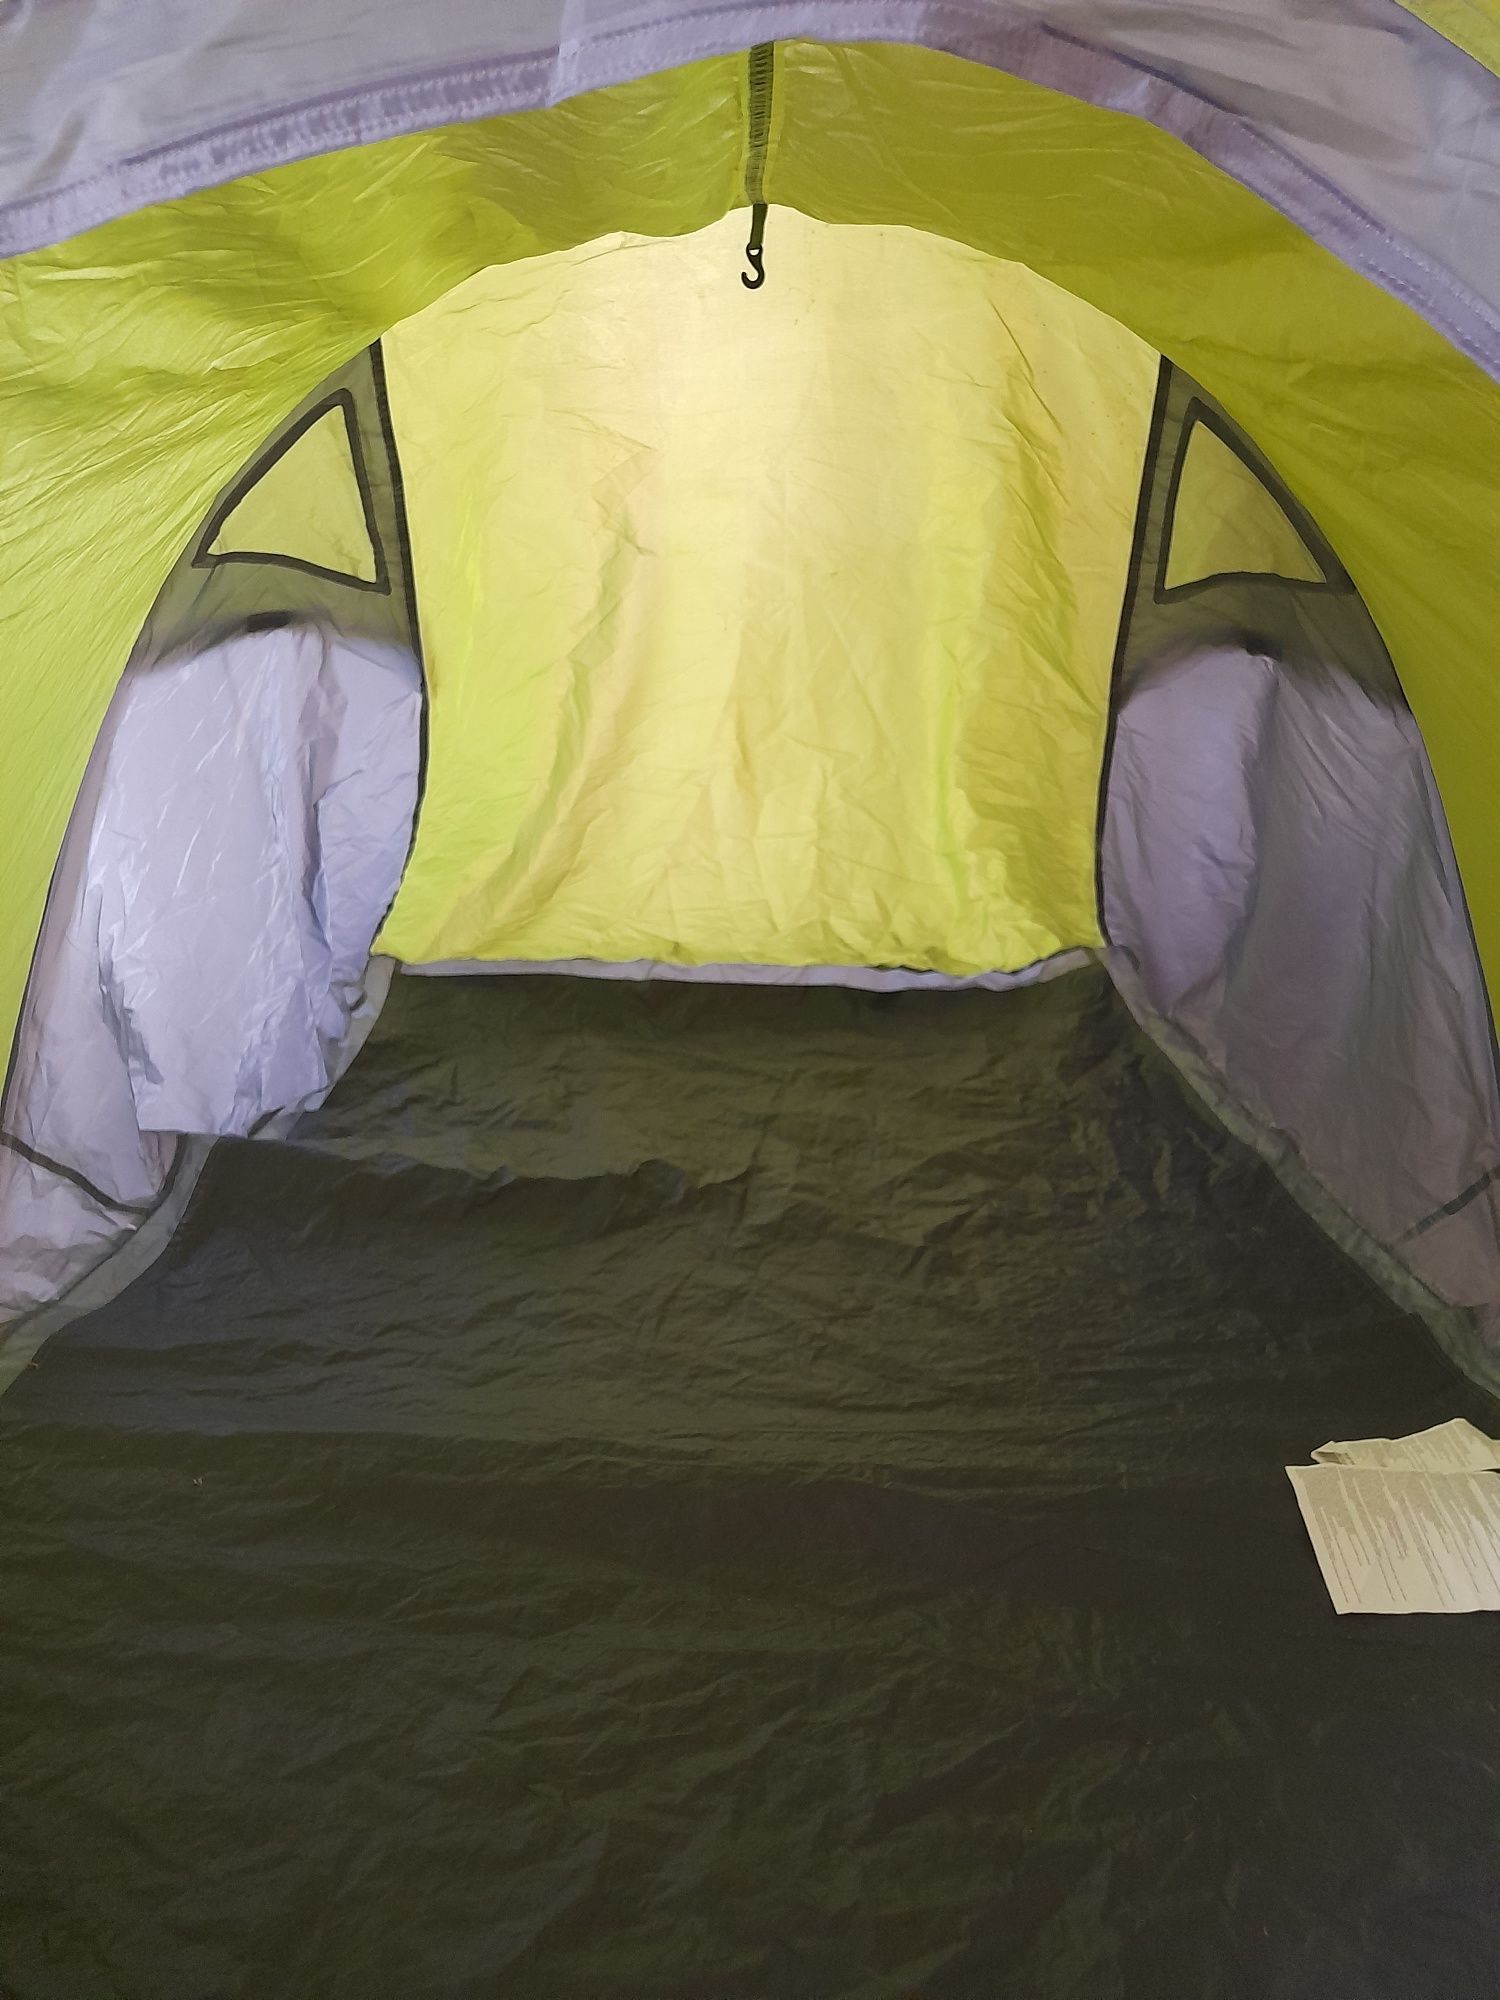 Vând cort camping